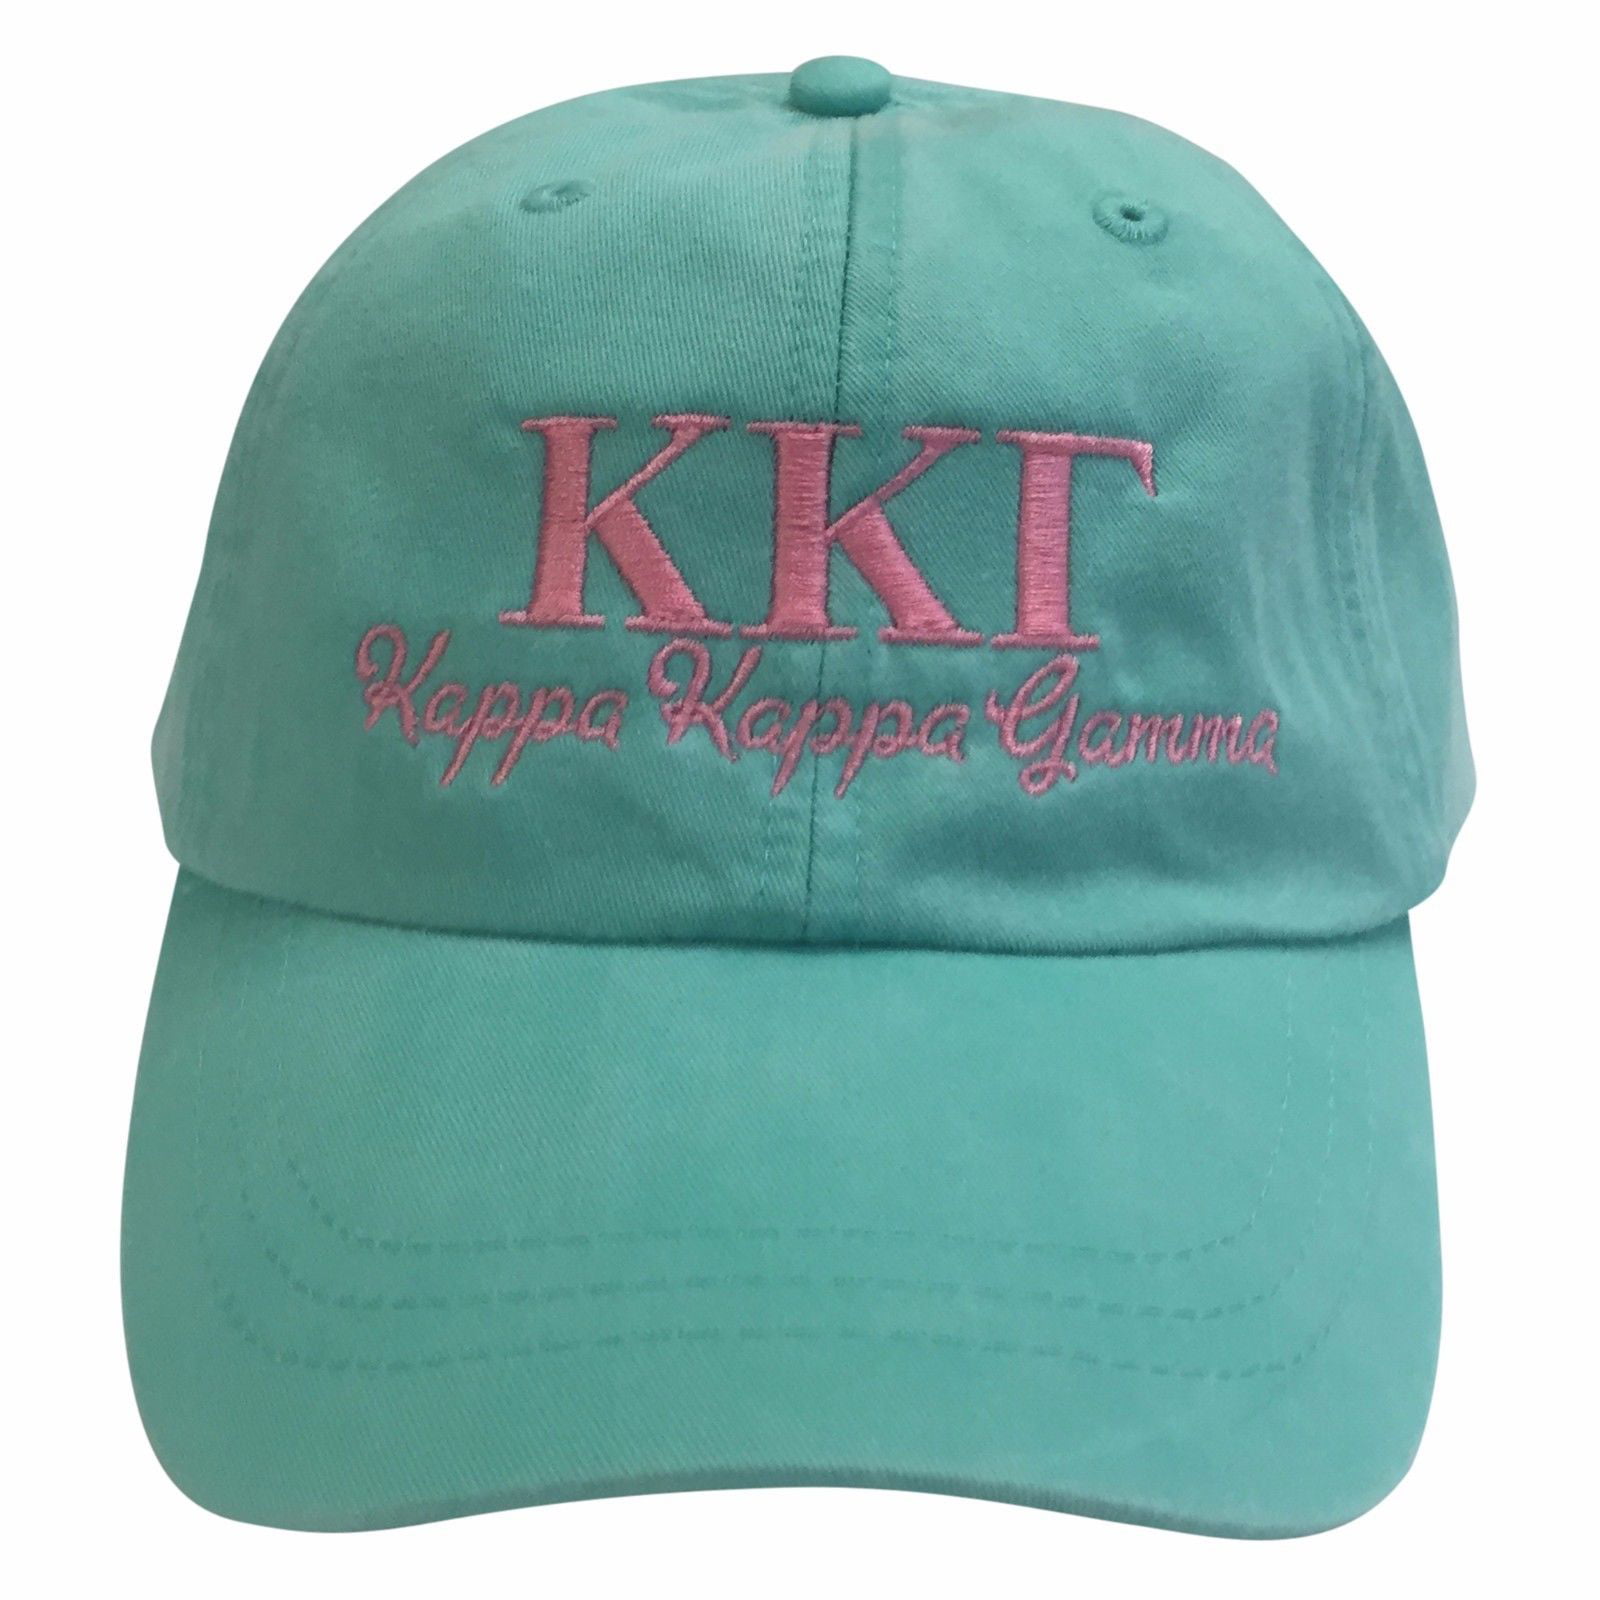 White Hat with Blue/Red Thread Baseball Hat S Kappa Kappa Gamma KKG